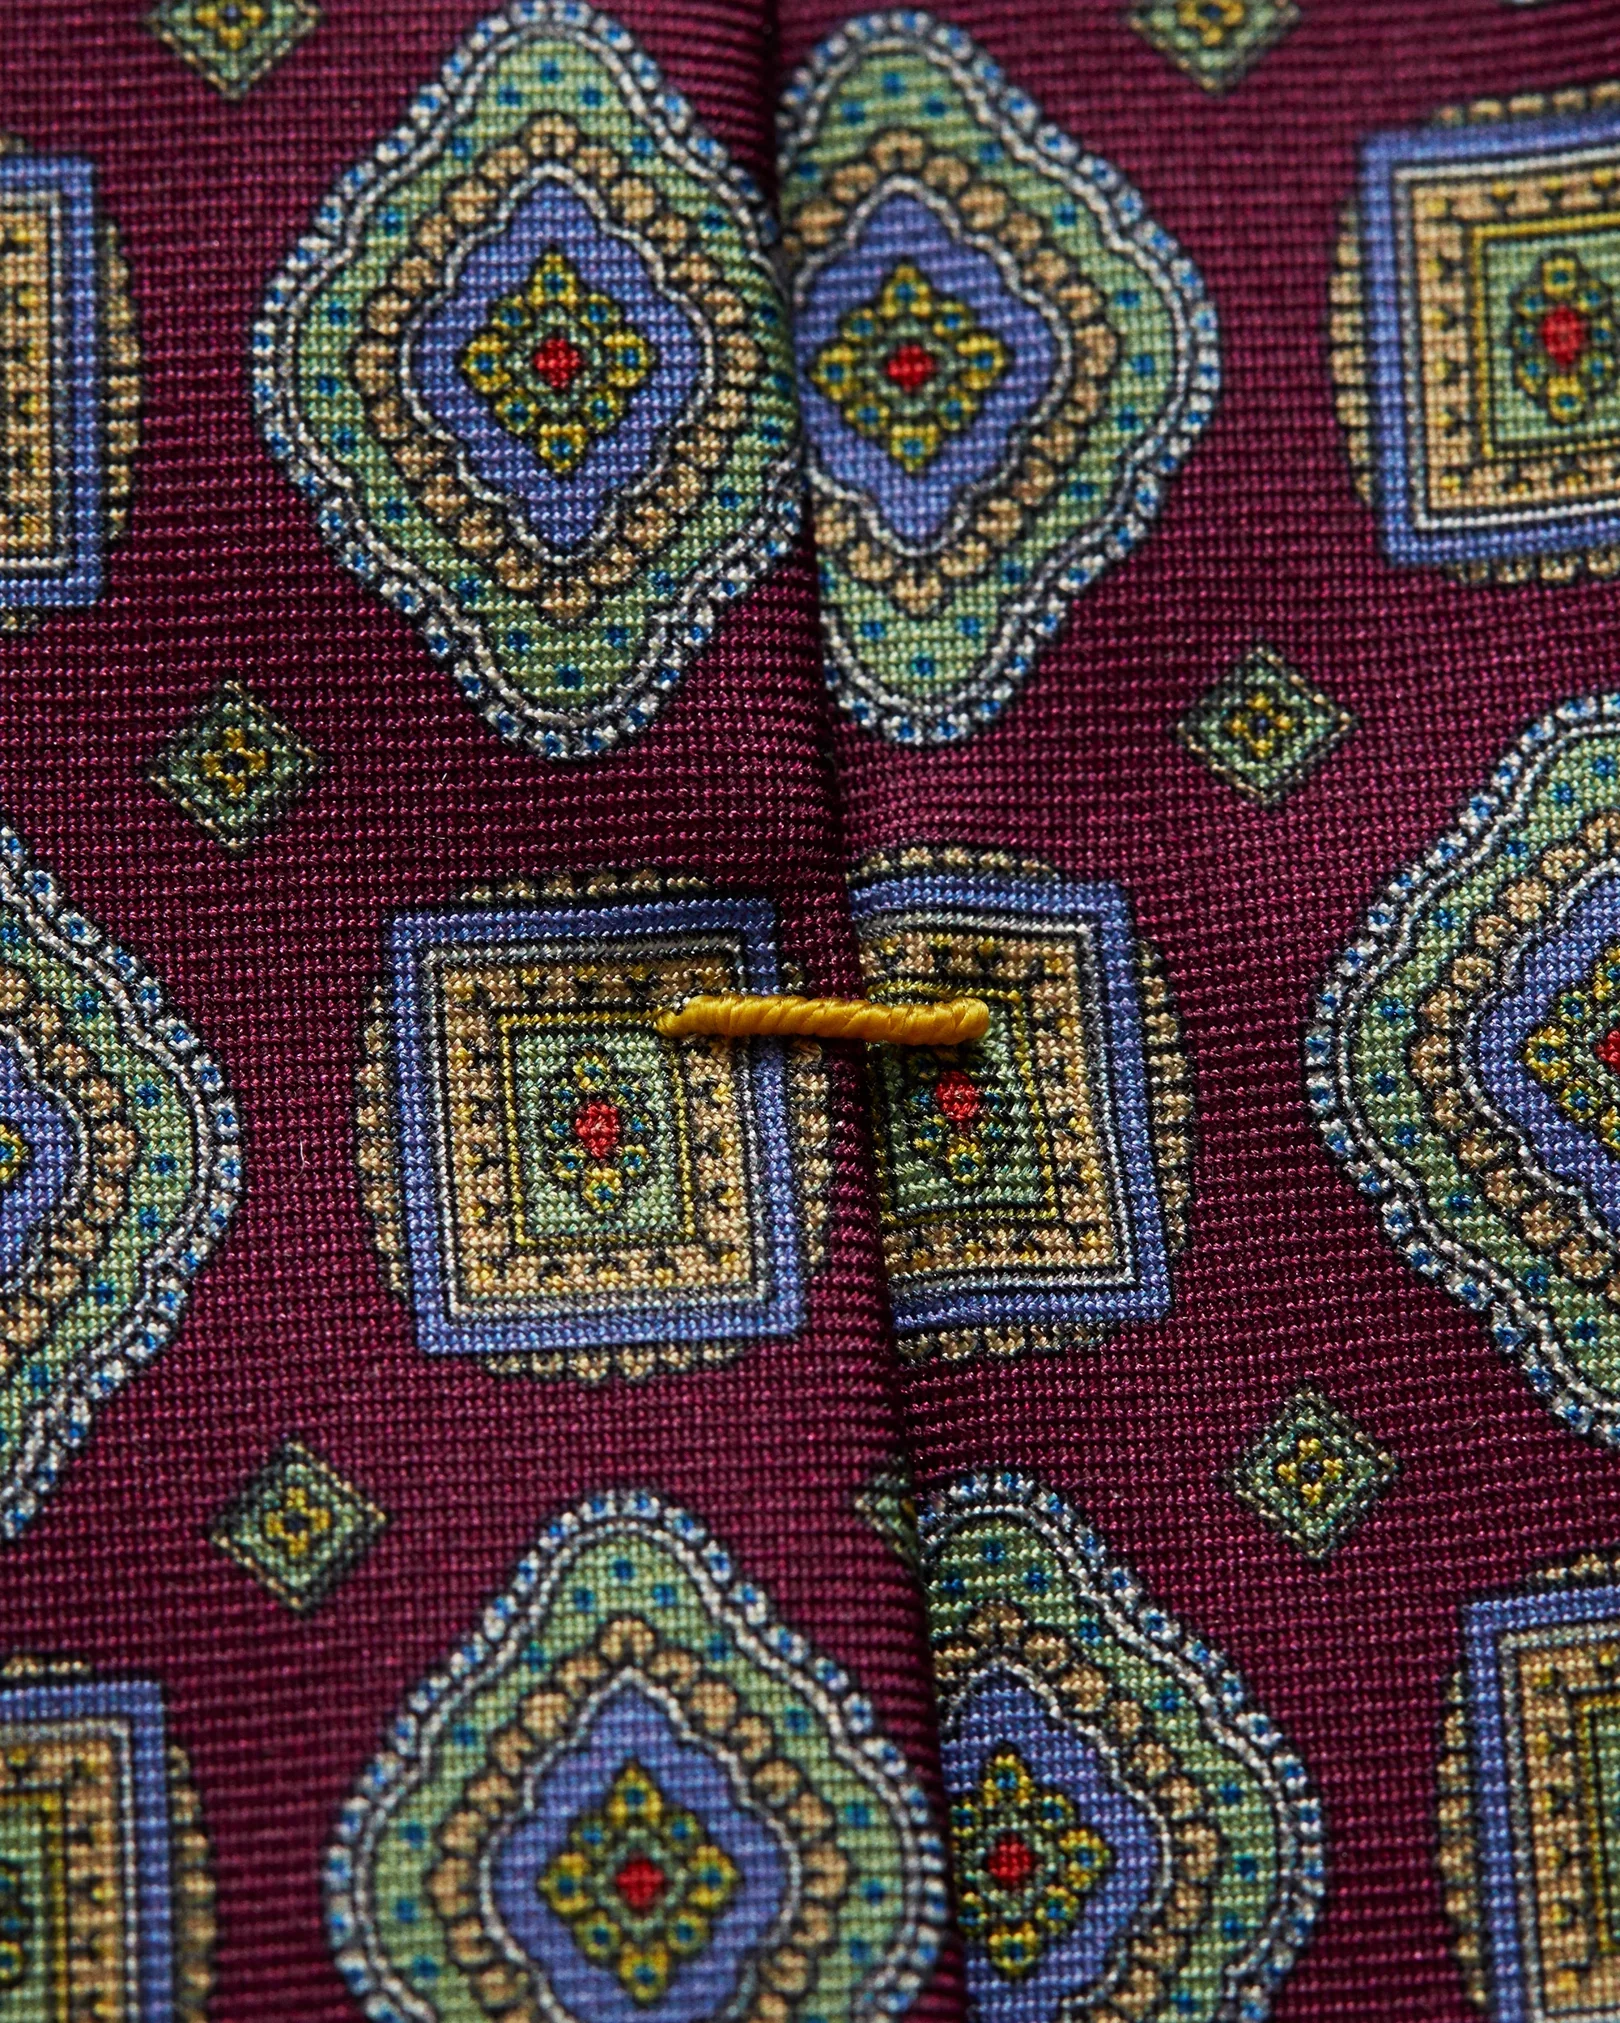 Eton - burgundy front tail printed tie